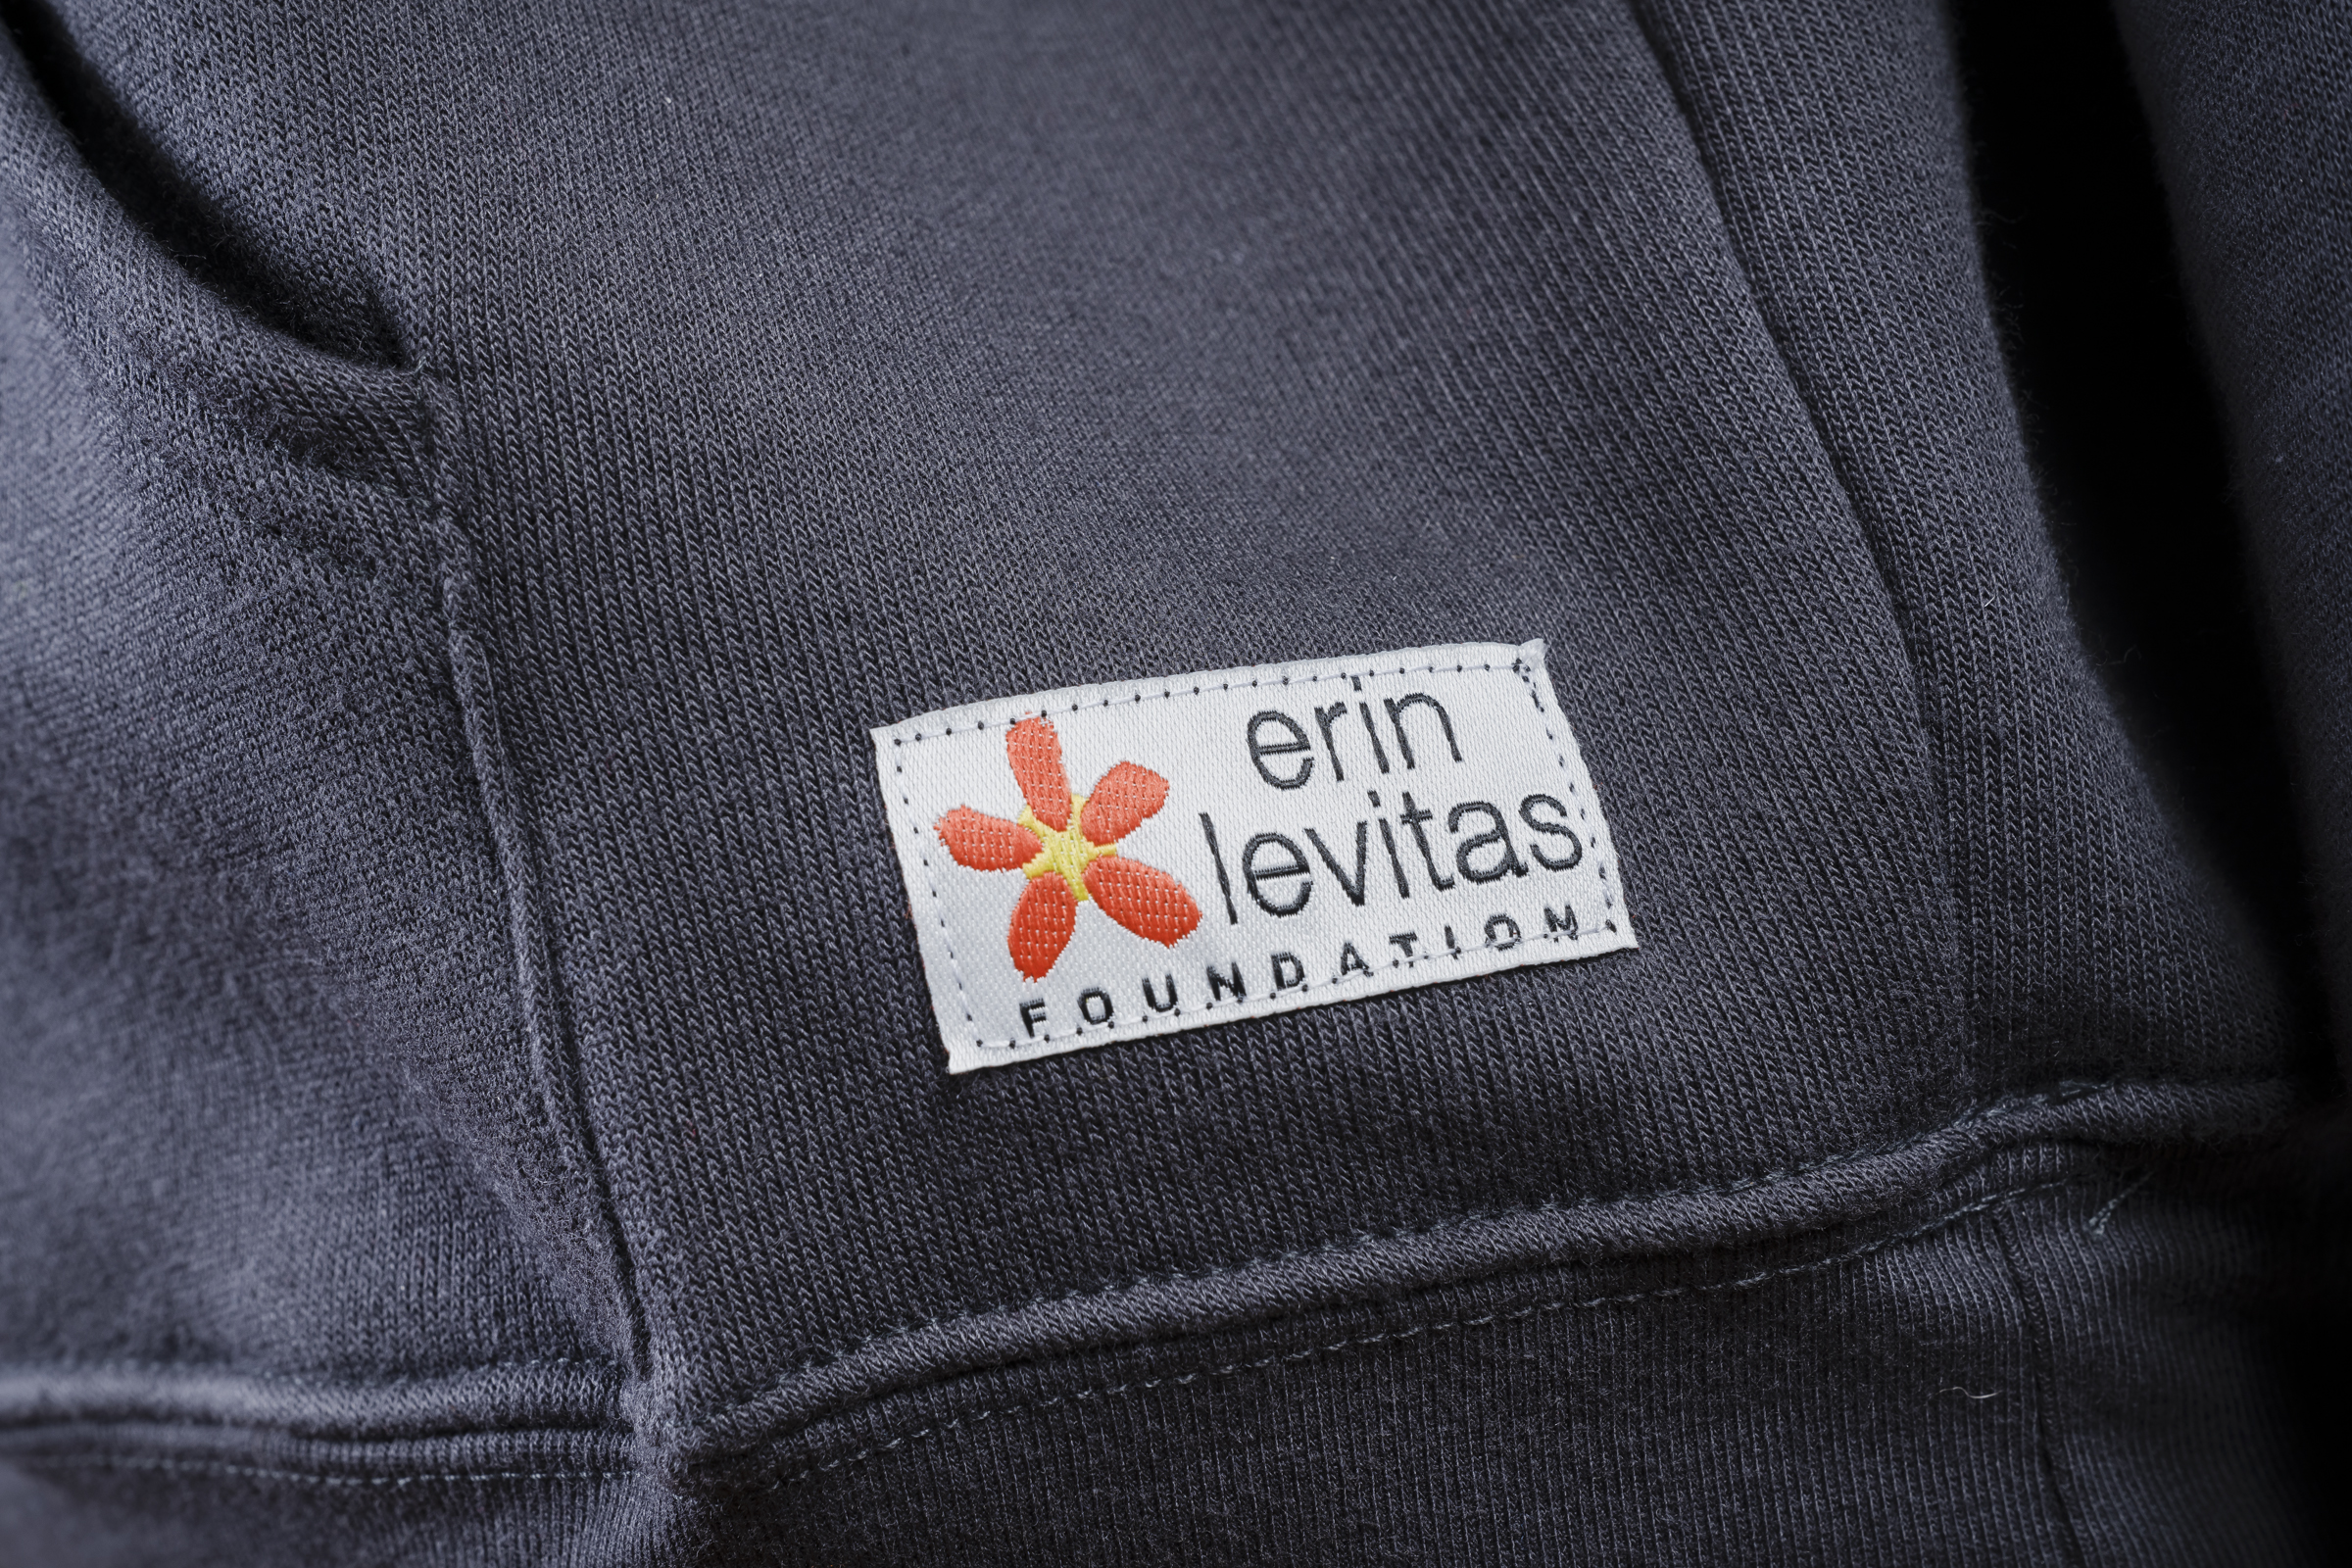 Foundation Levitas with Erin Sweatshirt - Gray Logo